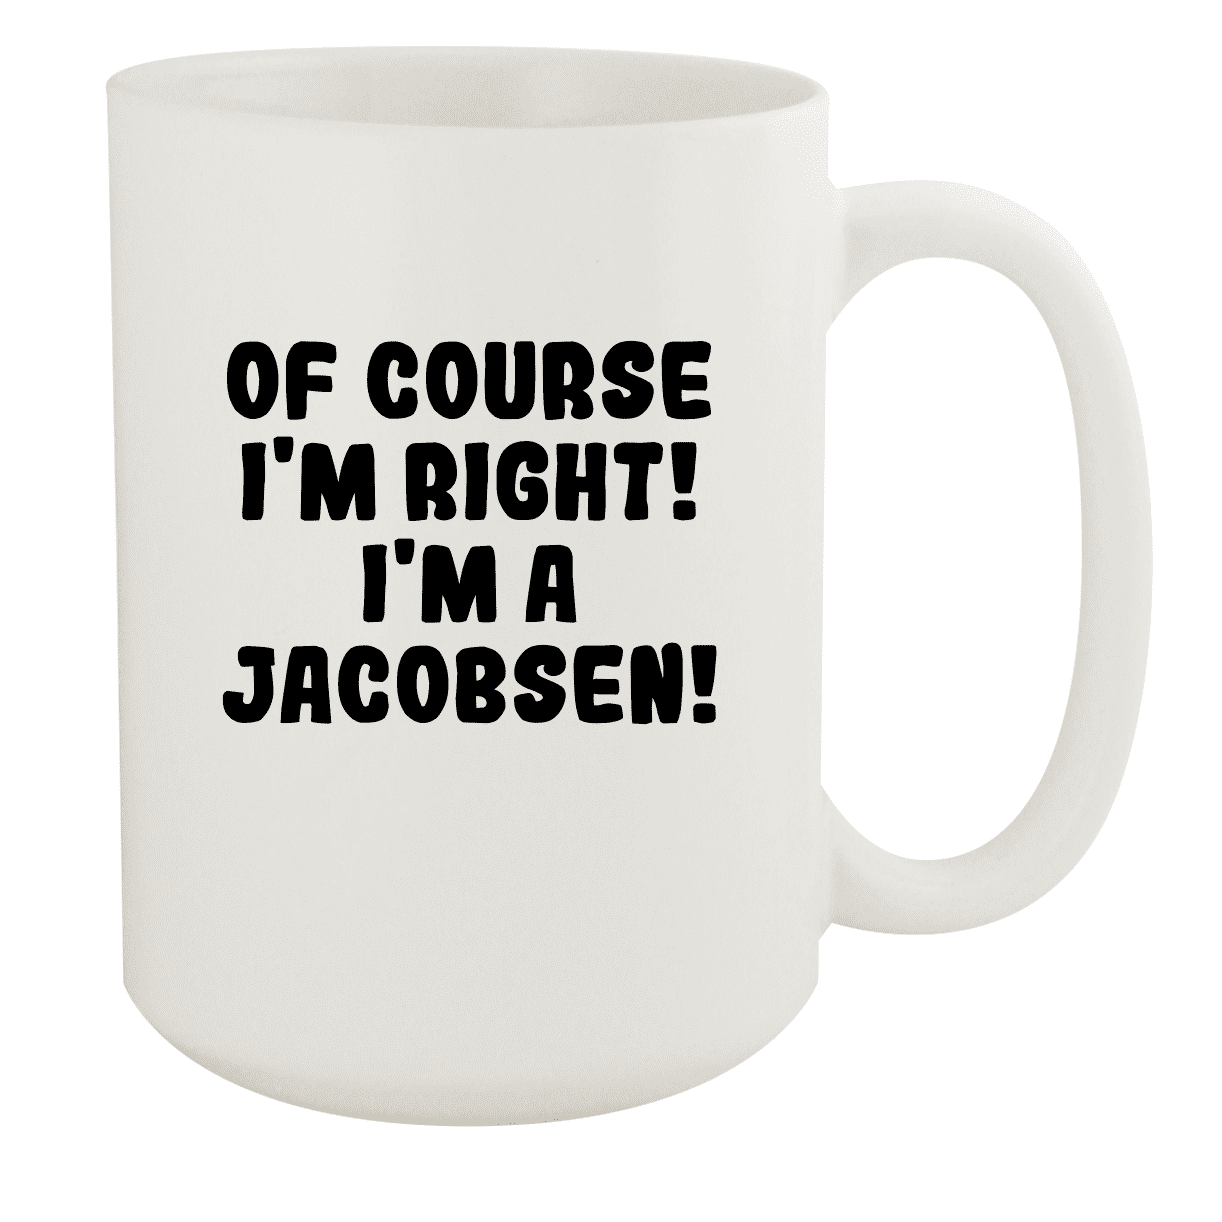 Of Course I'm Right! I'm A Jacobsen! - Ceramic 15oz White Mug, White